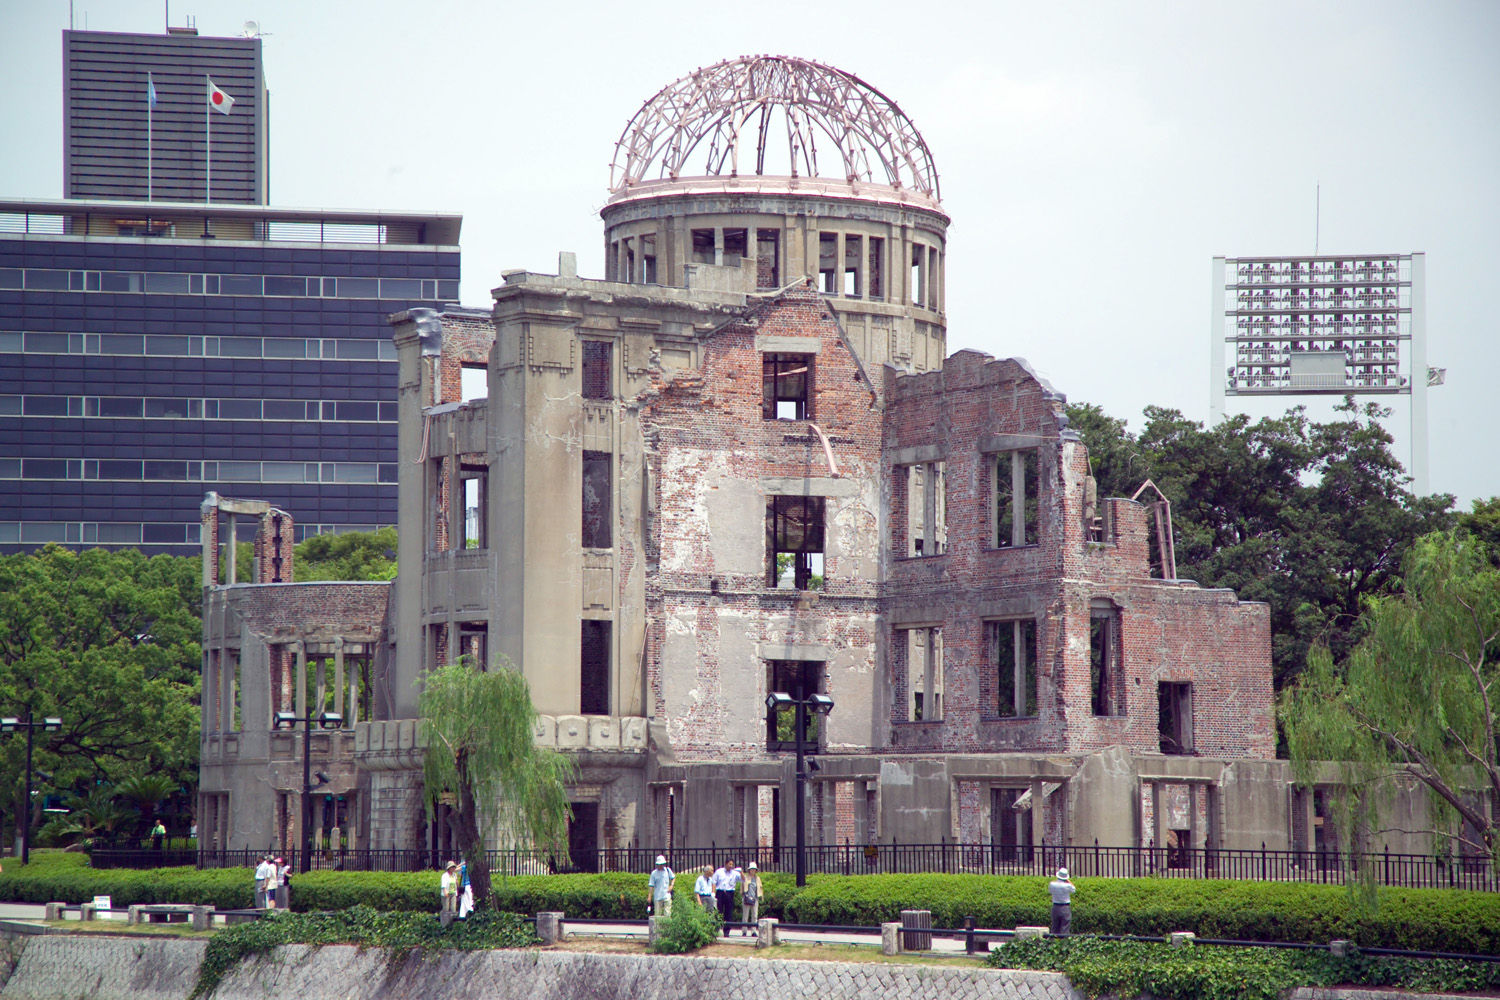 HiroshimaPeace Park messengers